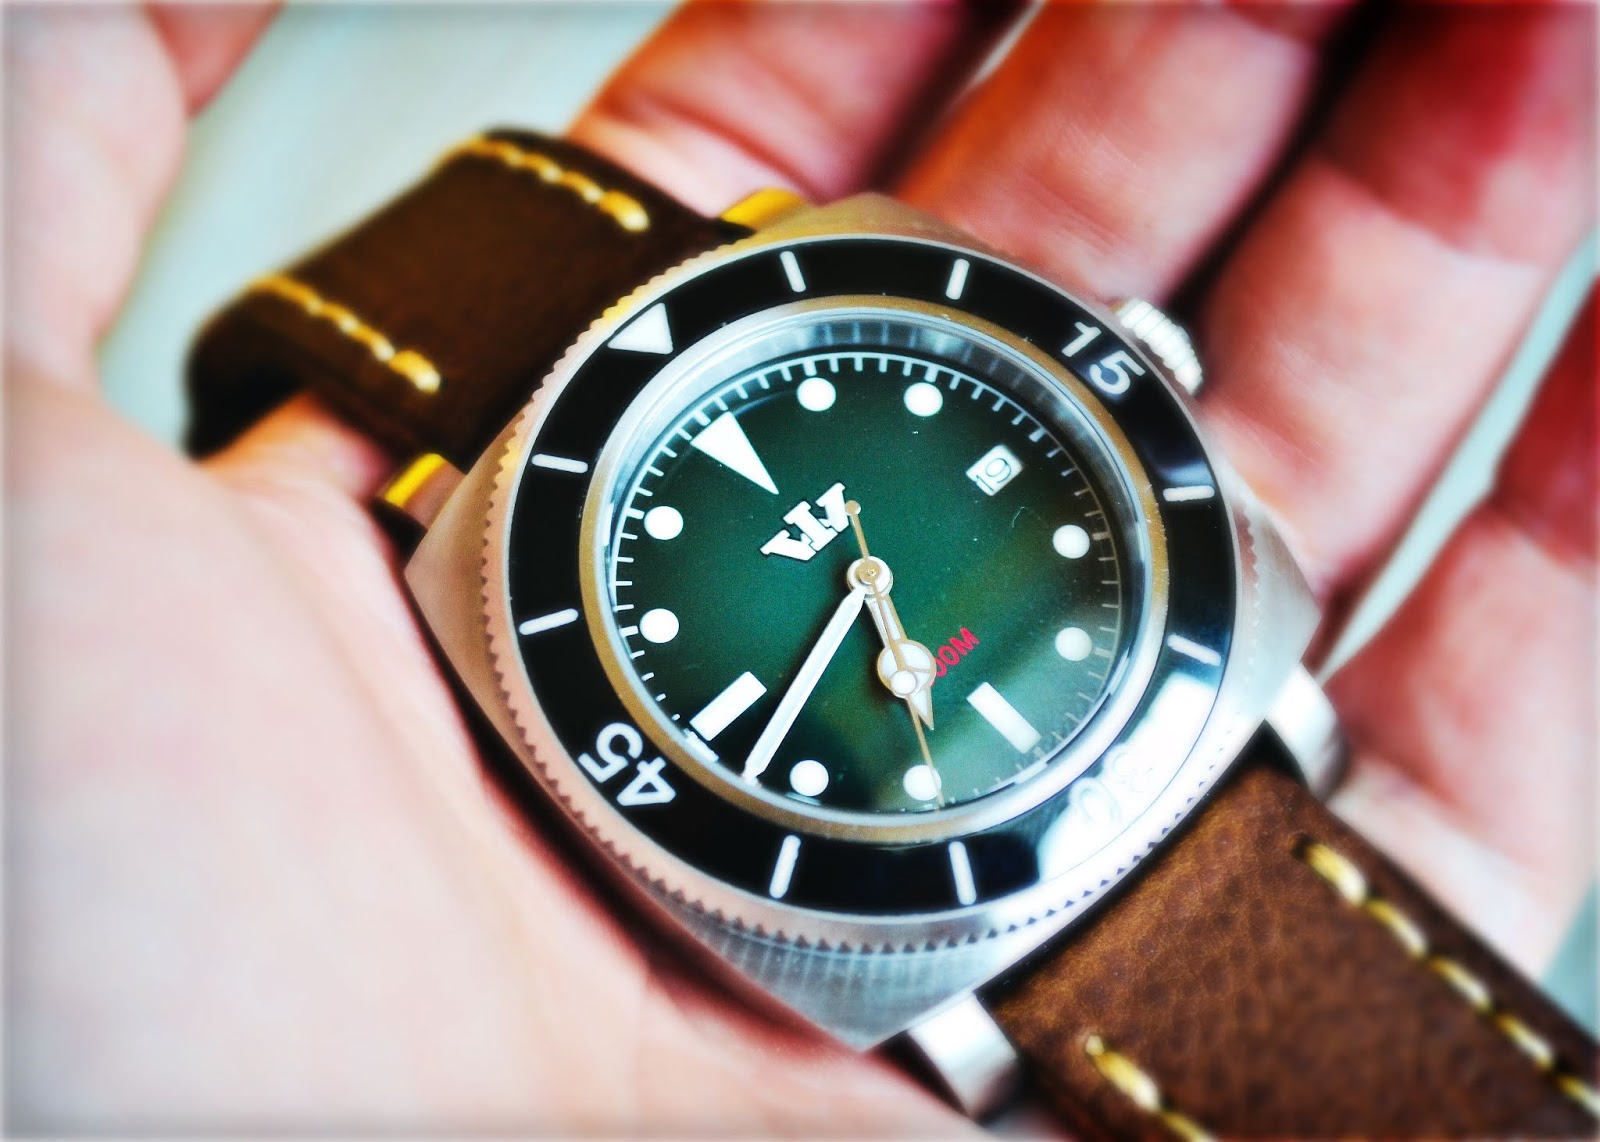 Island часы. Часы Айленд. Addiesdive часы. Microbrands Island watch. High-Tech Ceramic Diver r32144202.